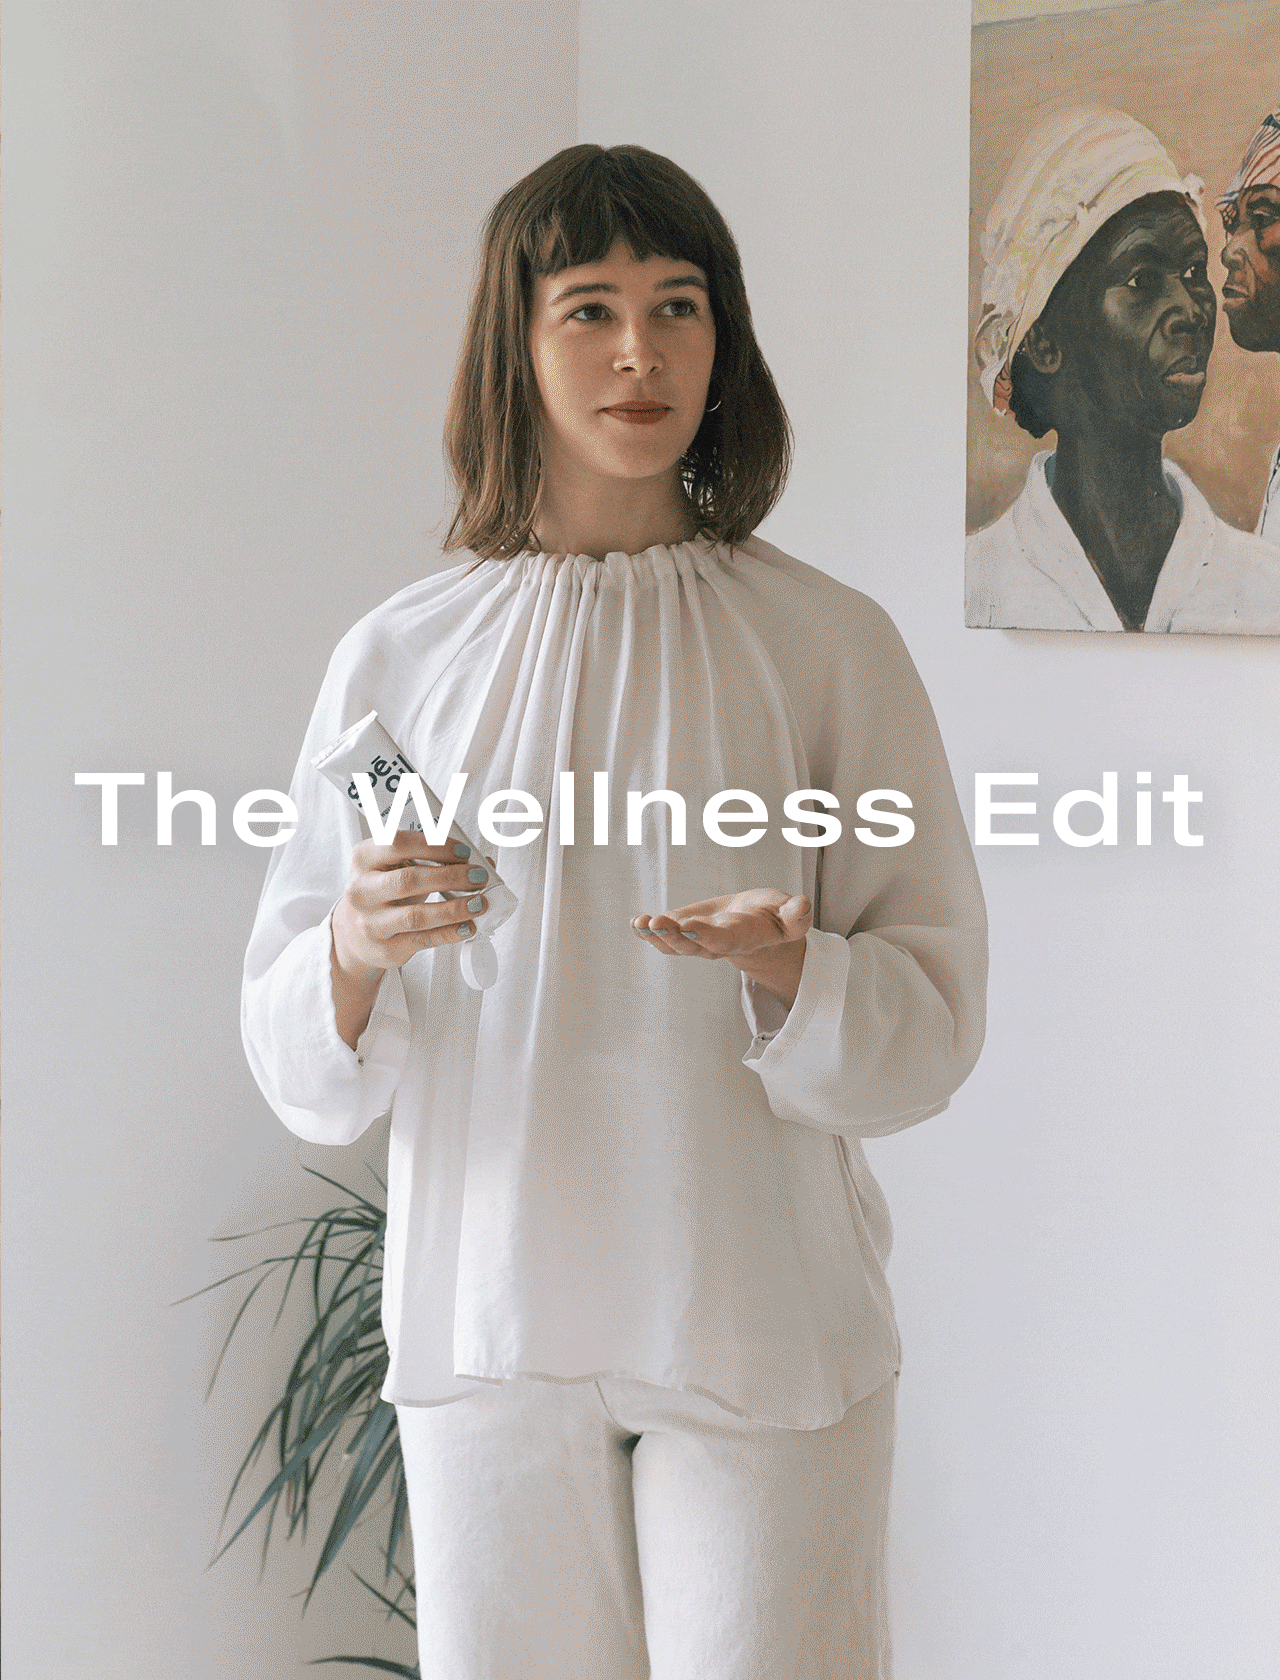 The Wellness Edit